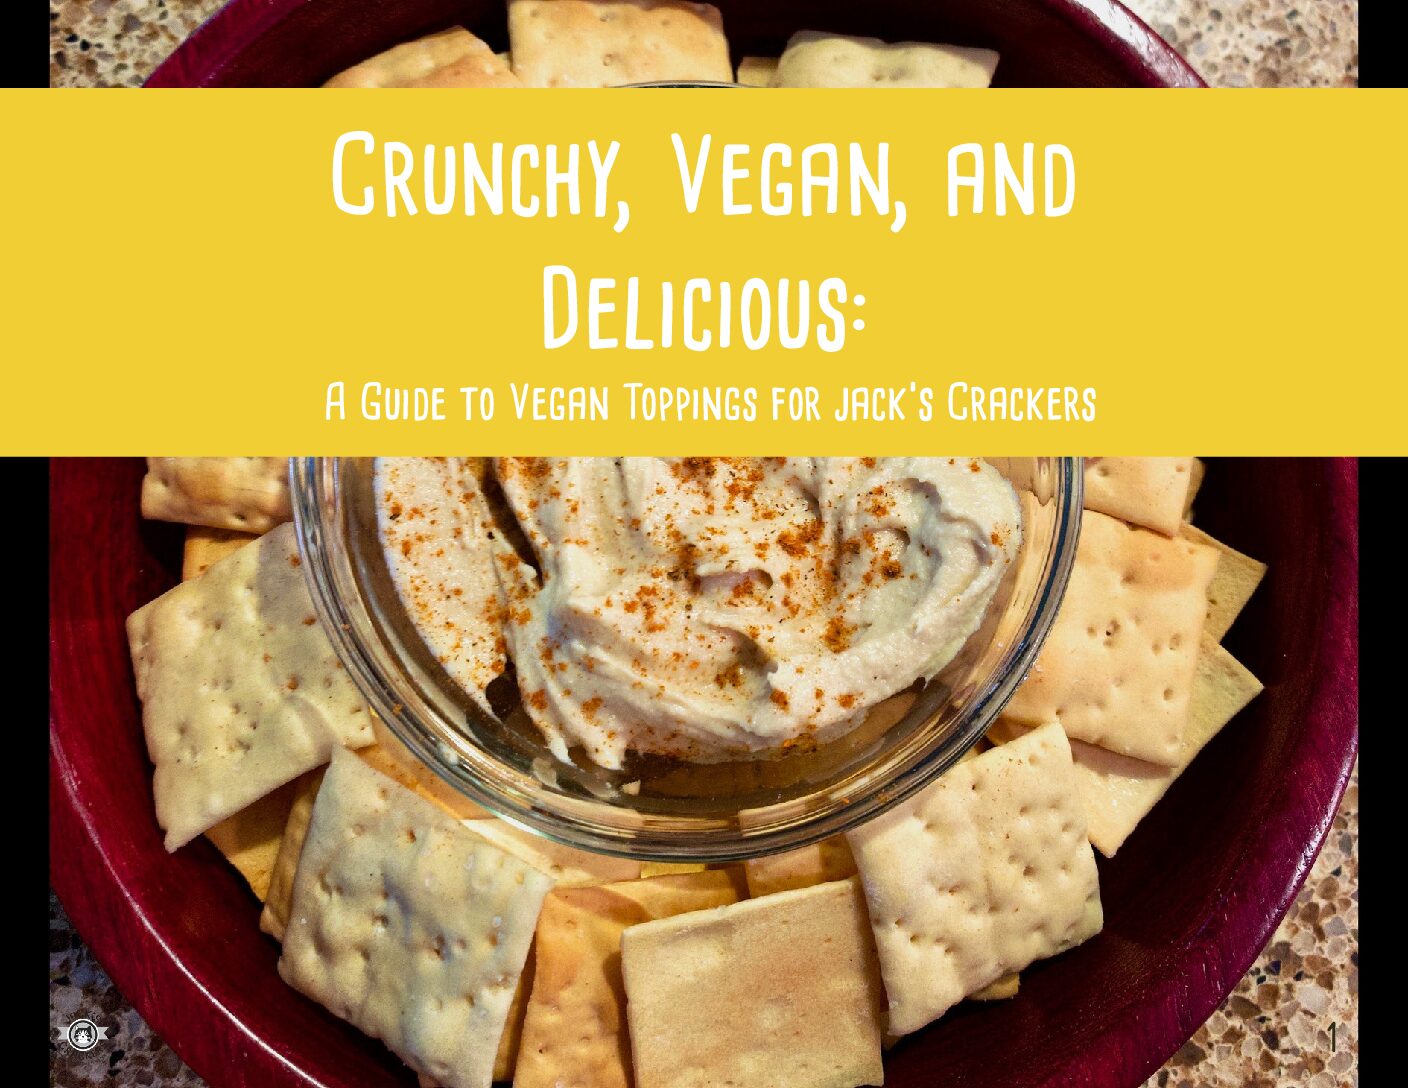 Crunchy, Vegan, and Delicious